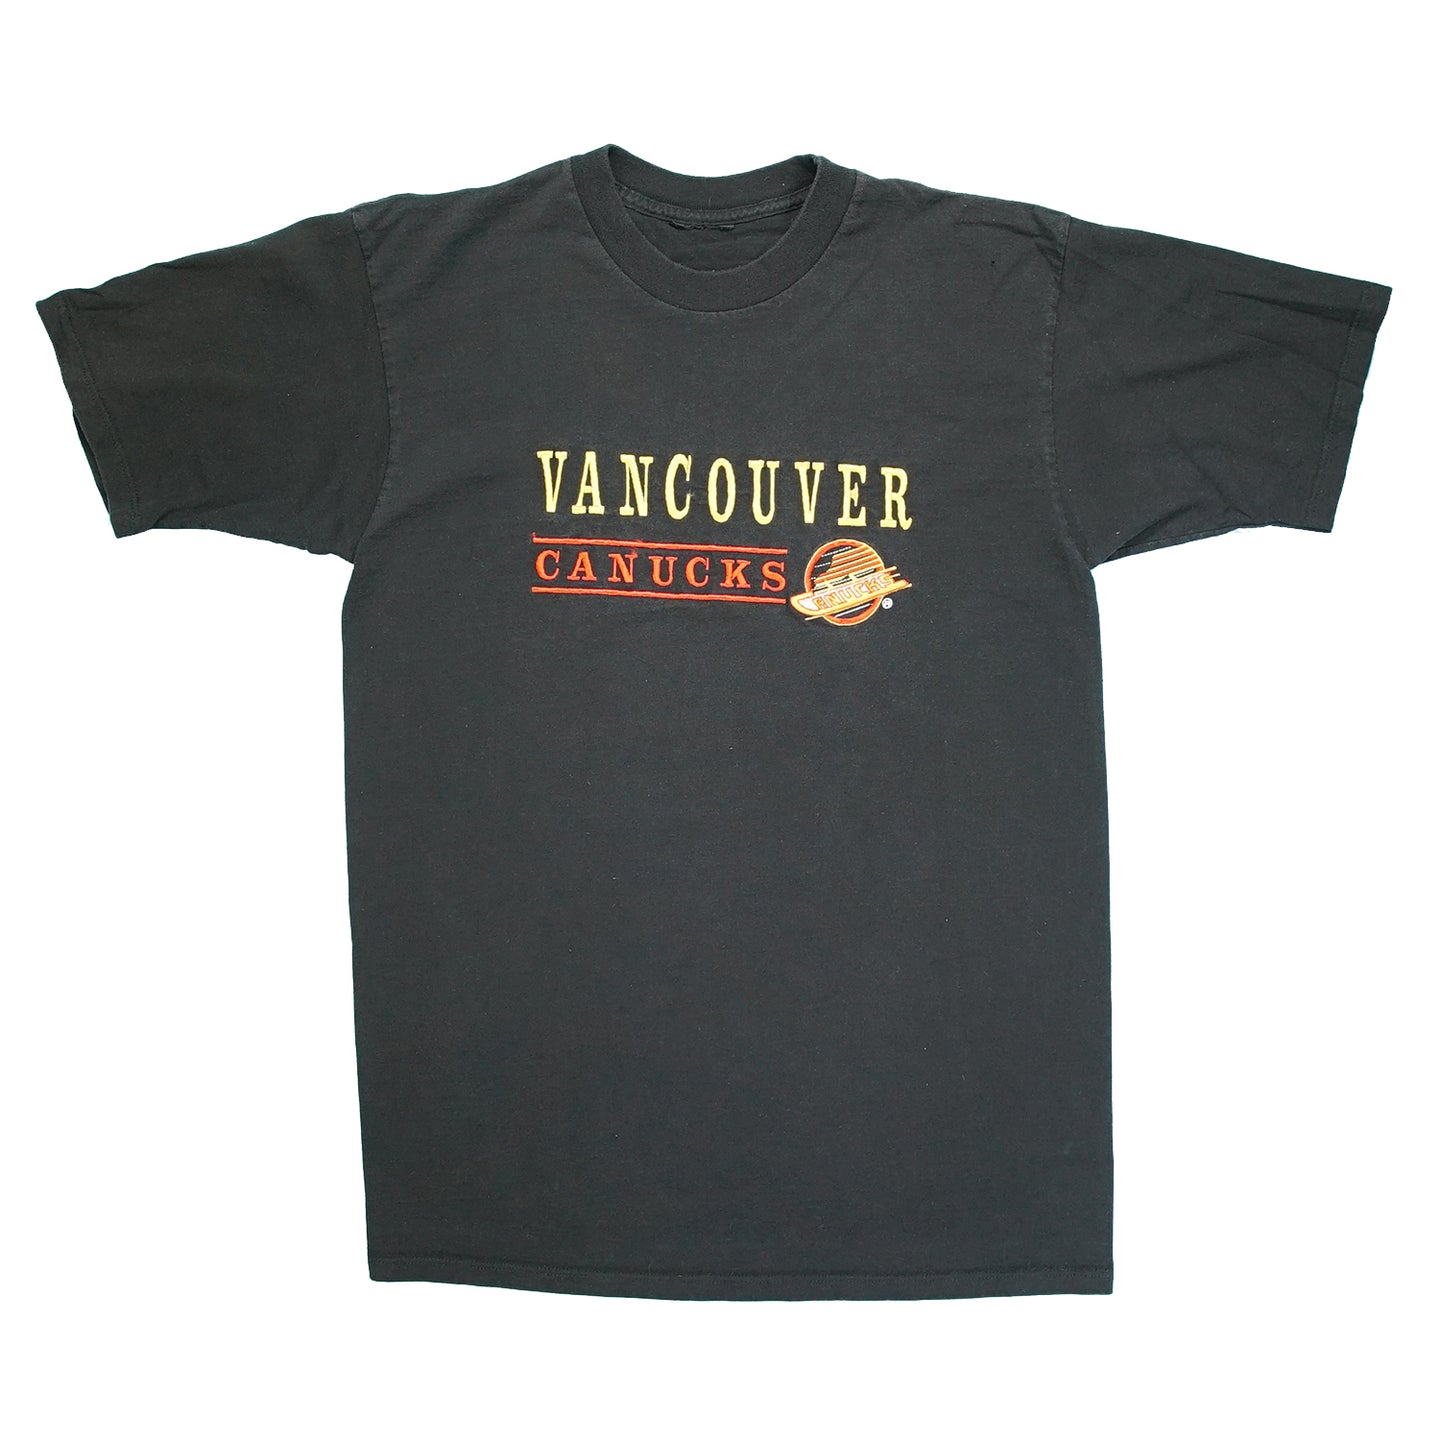 Vintage Vancouver Canucks text logo tee M